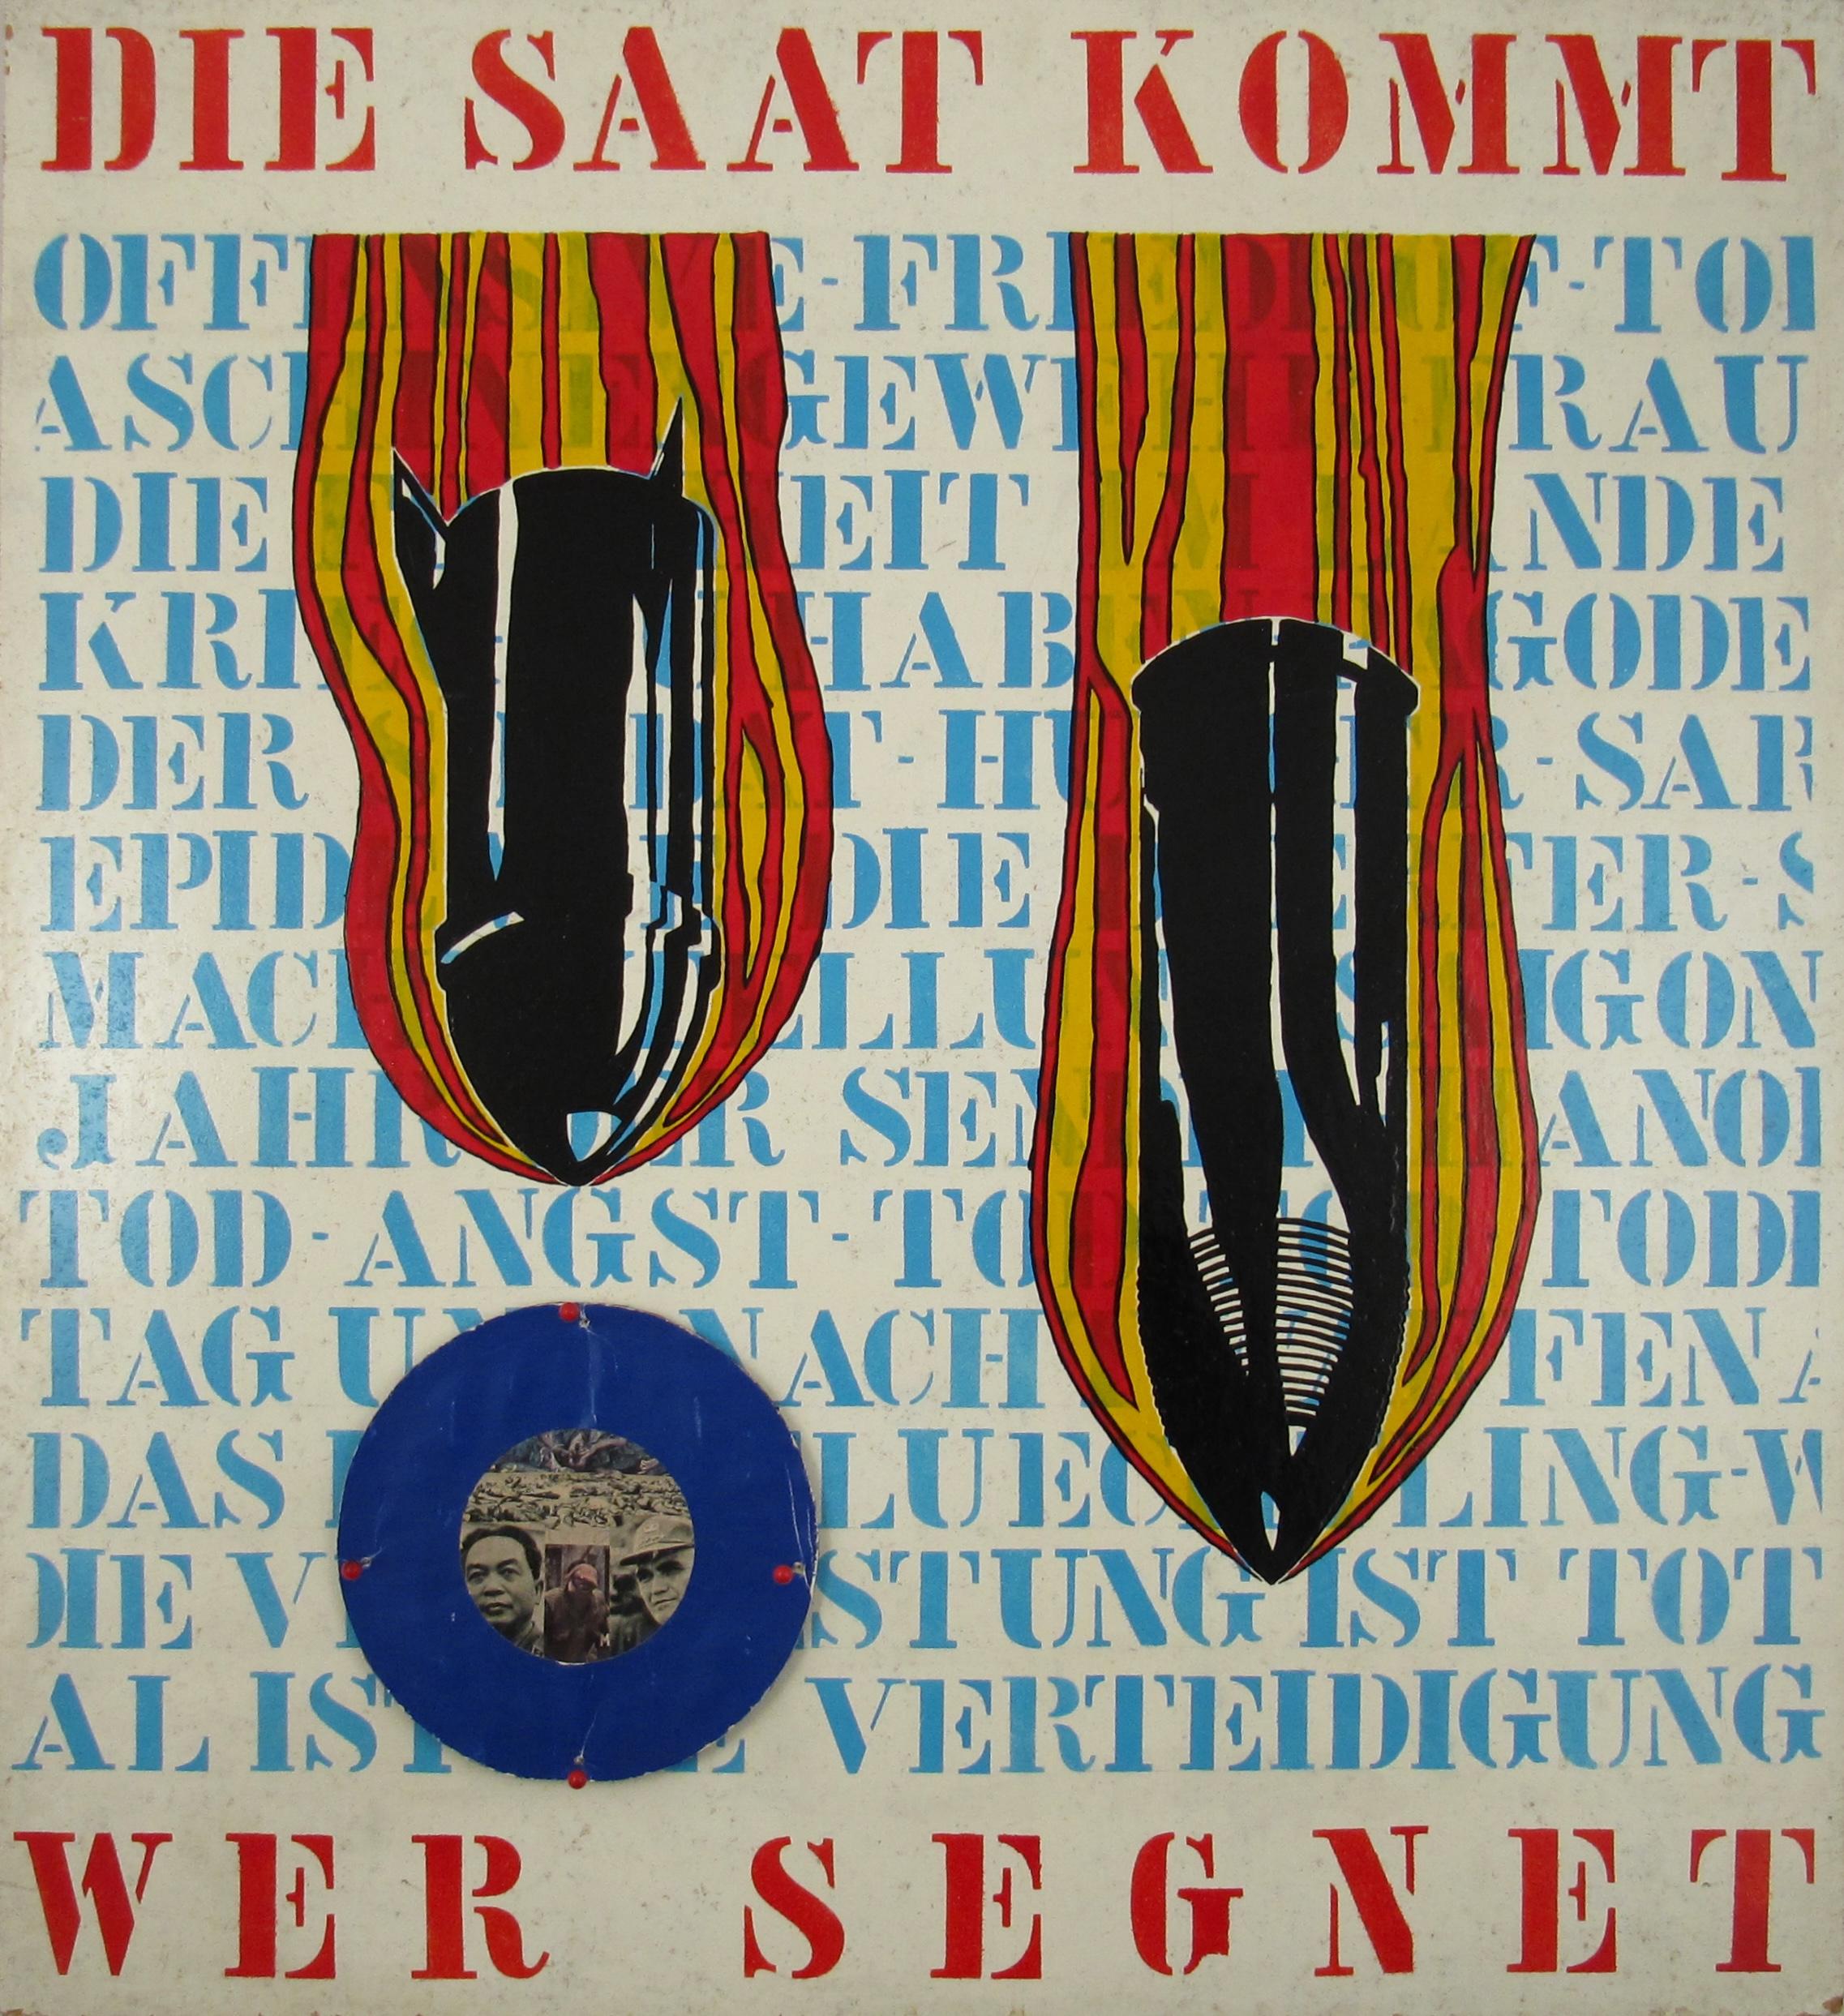 Abstract Painting Alois Müller - Alois MÜLLER - Die Saat kommt - Wer segnet - 1968 - Swiss Pop Art / Anti-war Art